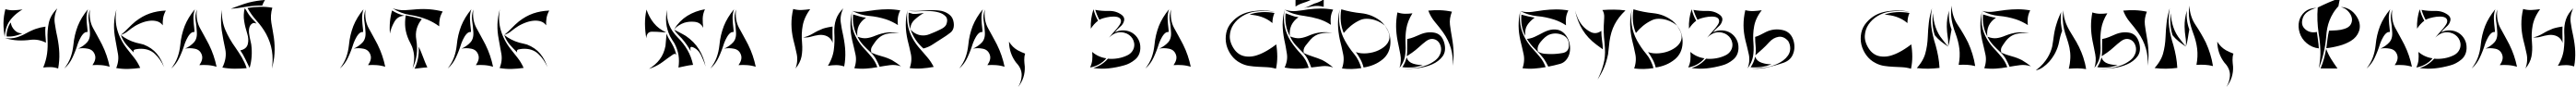 Пример написания шрифтом Xorx_windy Cyr текста на белорусском